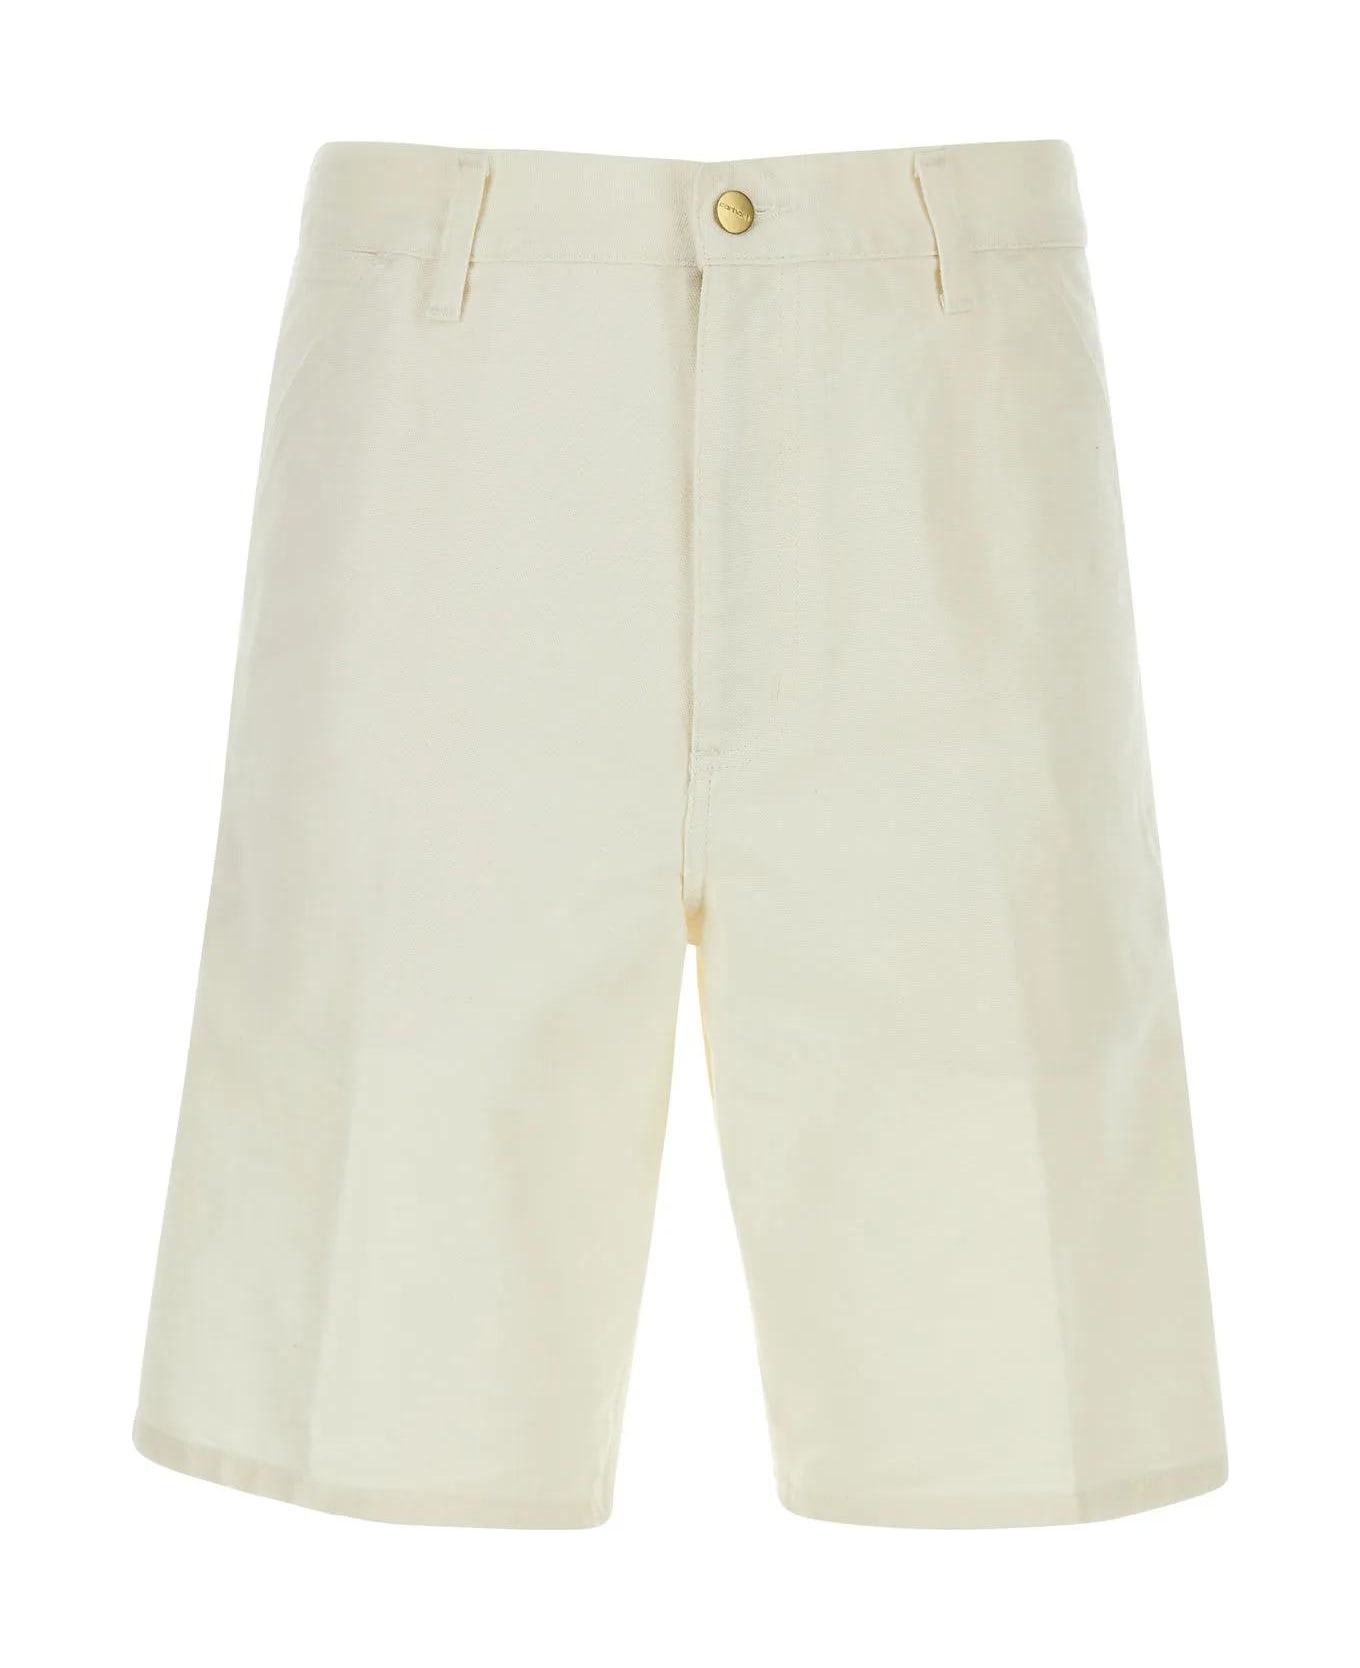 Carhartt White Cotton Single Knee Short - WHITE